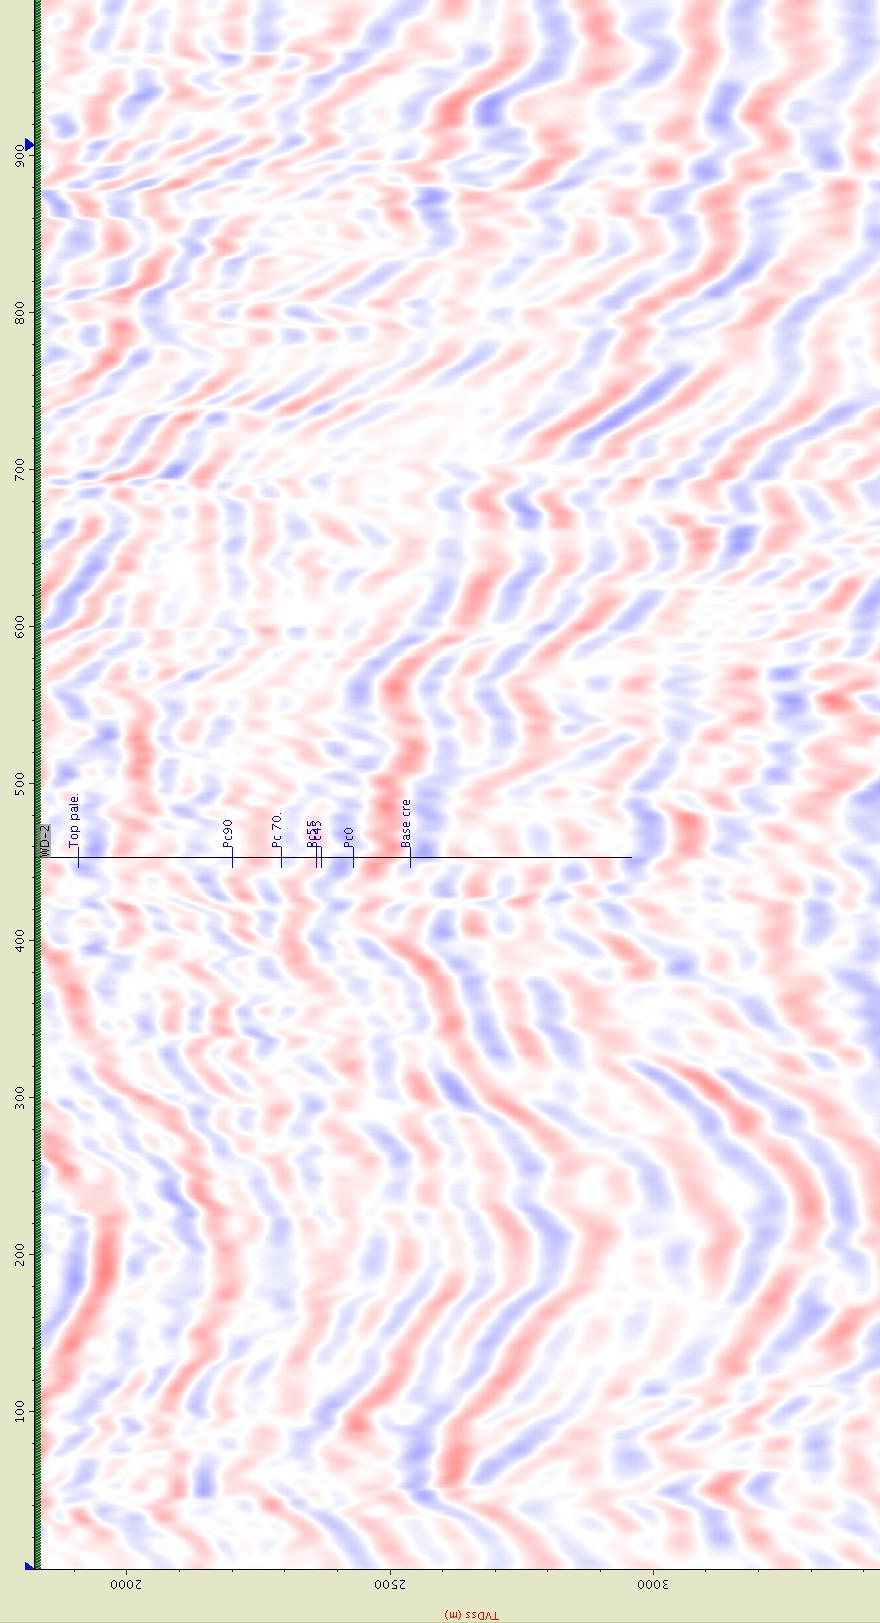 SDT-2 Top A Top A-1 Top A-2 Base-B Gambar 4.2 Data seismik 2D 44 8. Data pre-stack seismik dalam bentuk angle gather Data ini dapat dilihat pada Gambar 4.3 Gambar 4.